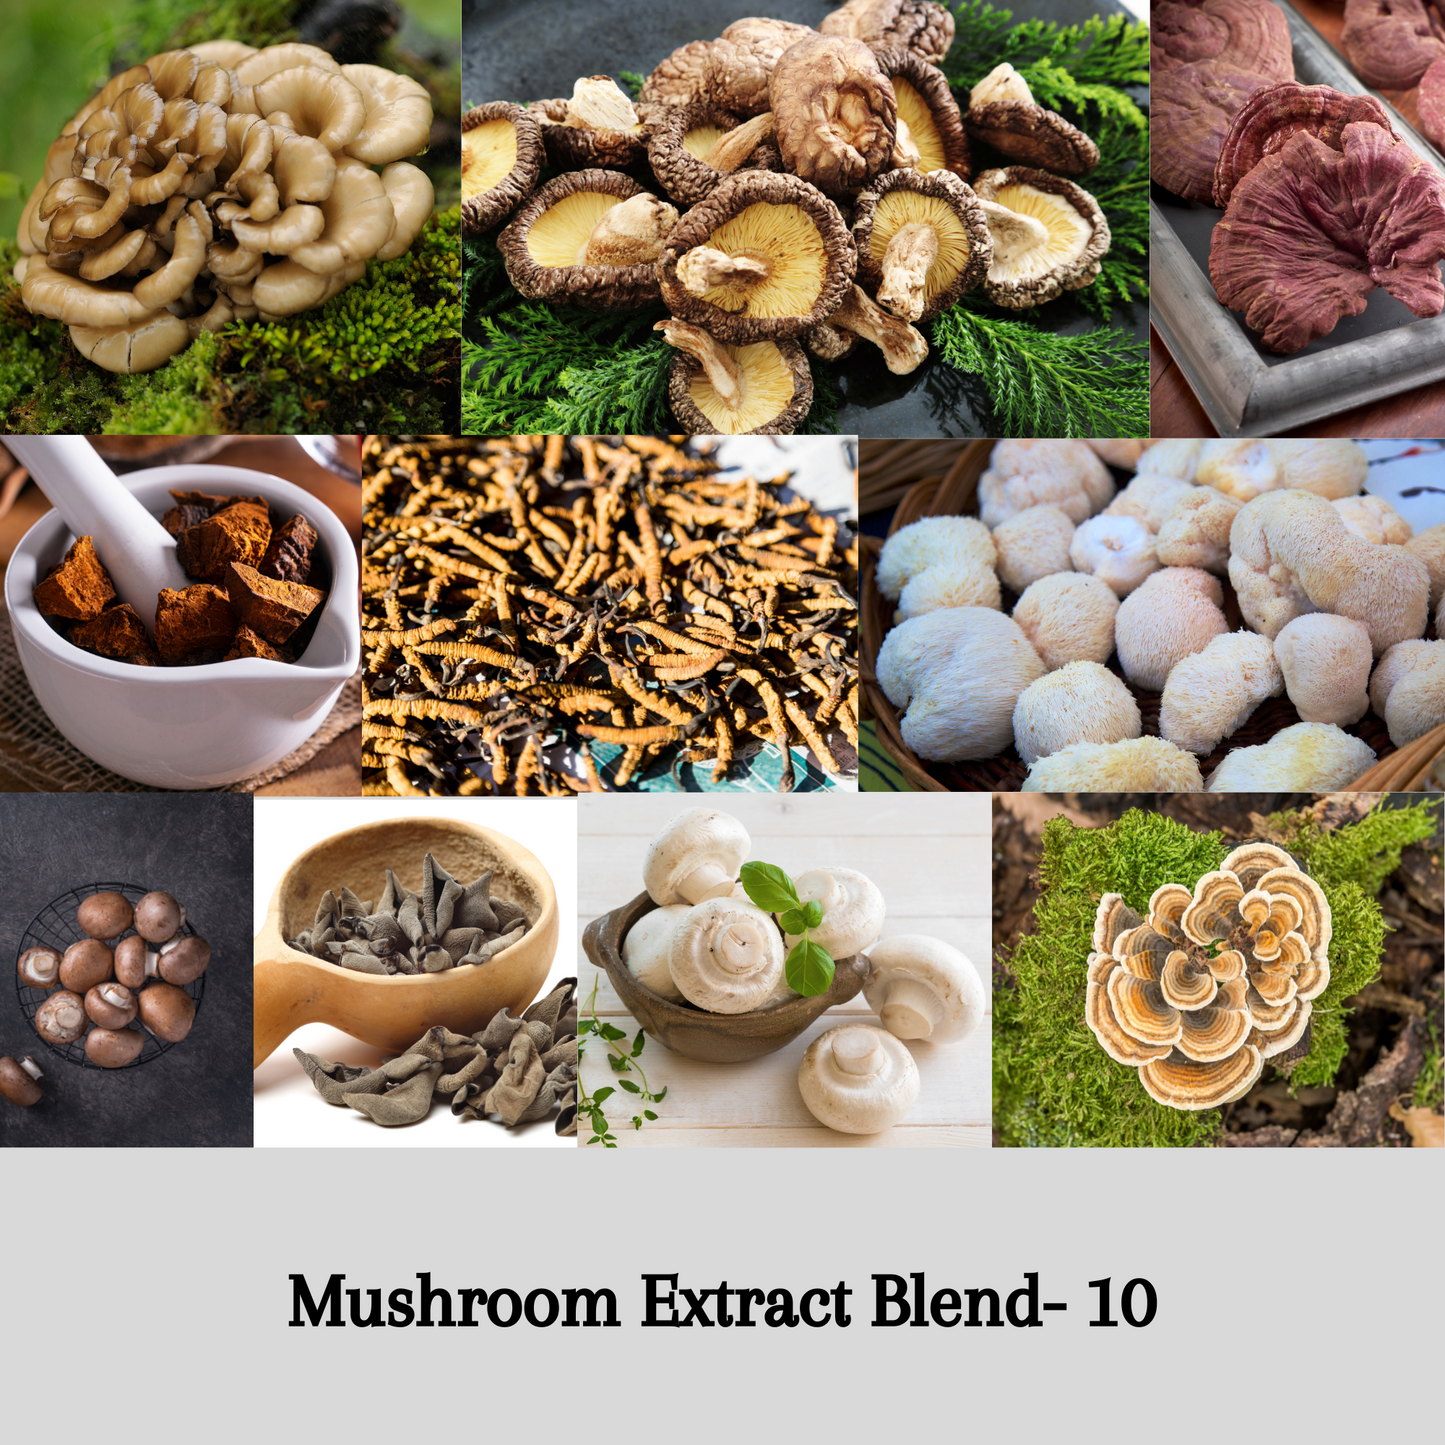 Mushroom Extract Blend - 10